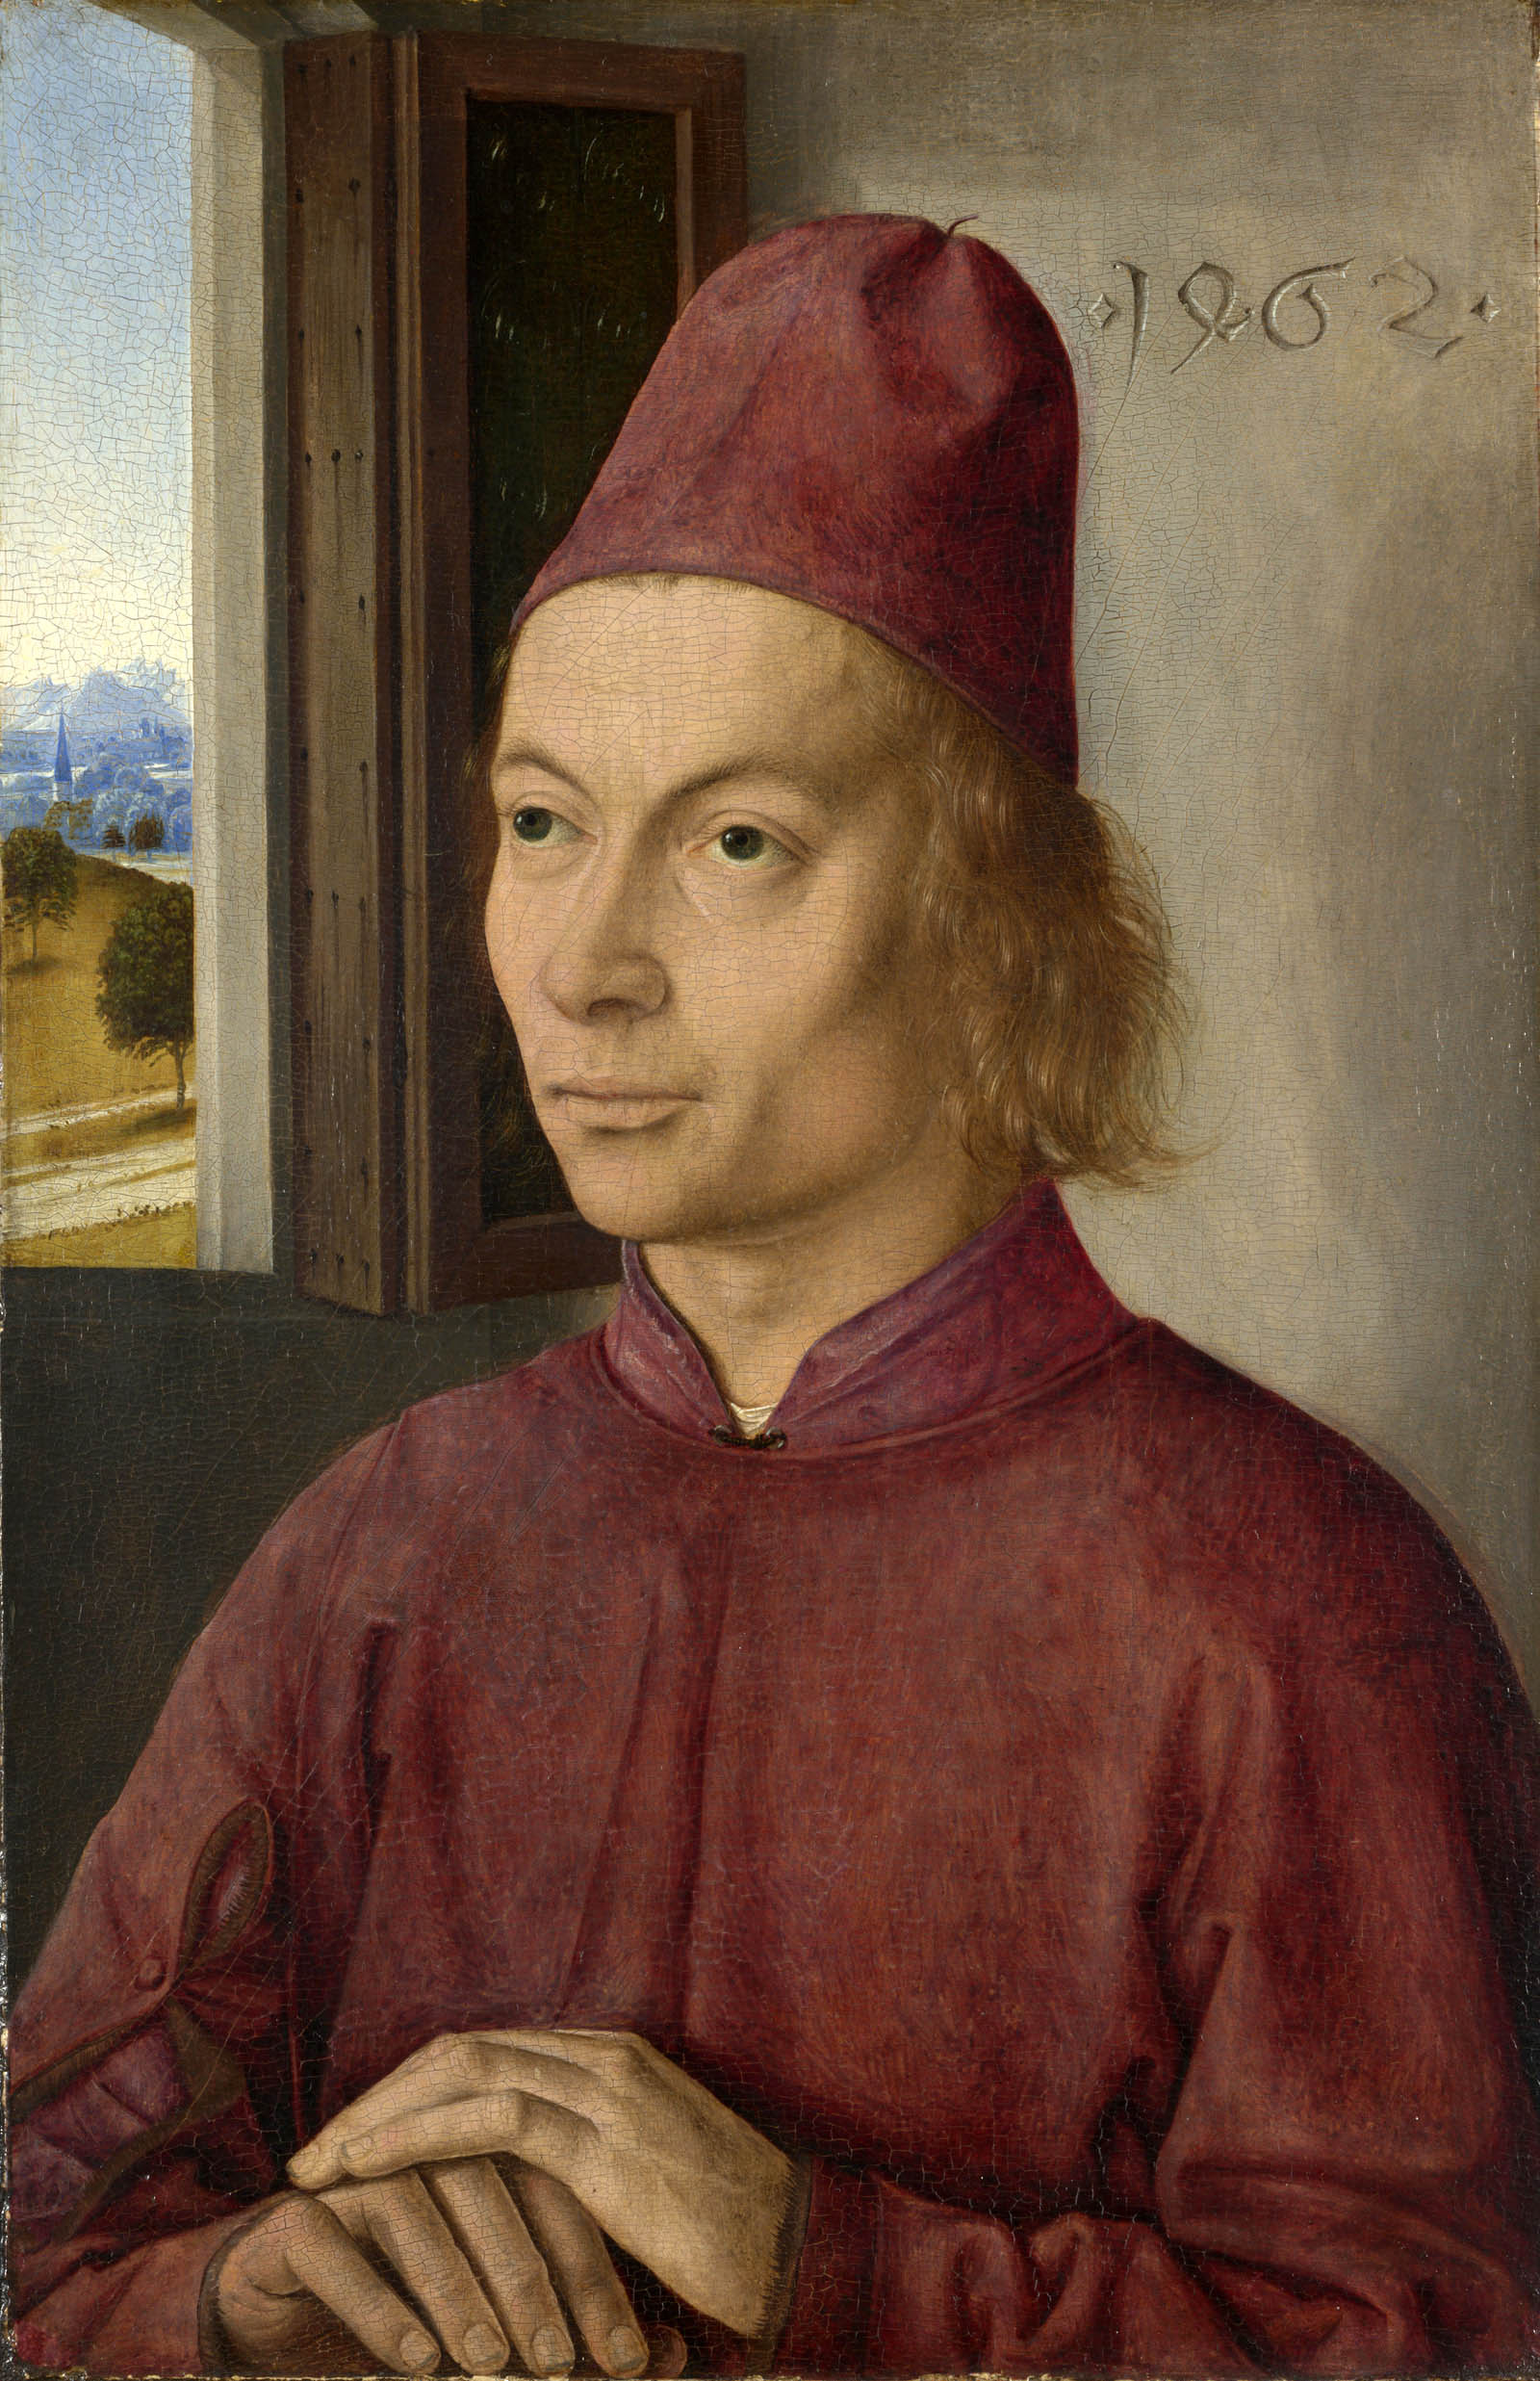 File:Bouts Portrait of a Man 1462.jpg - Wikimedia Commons